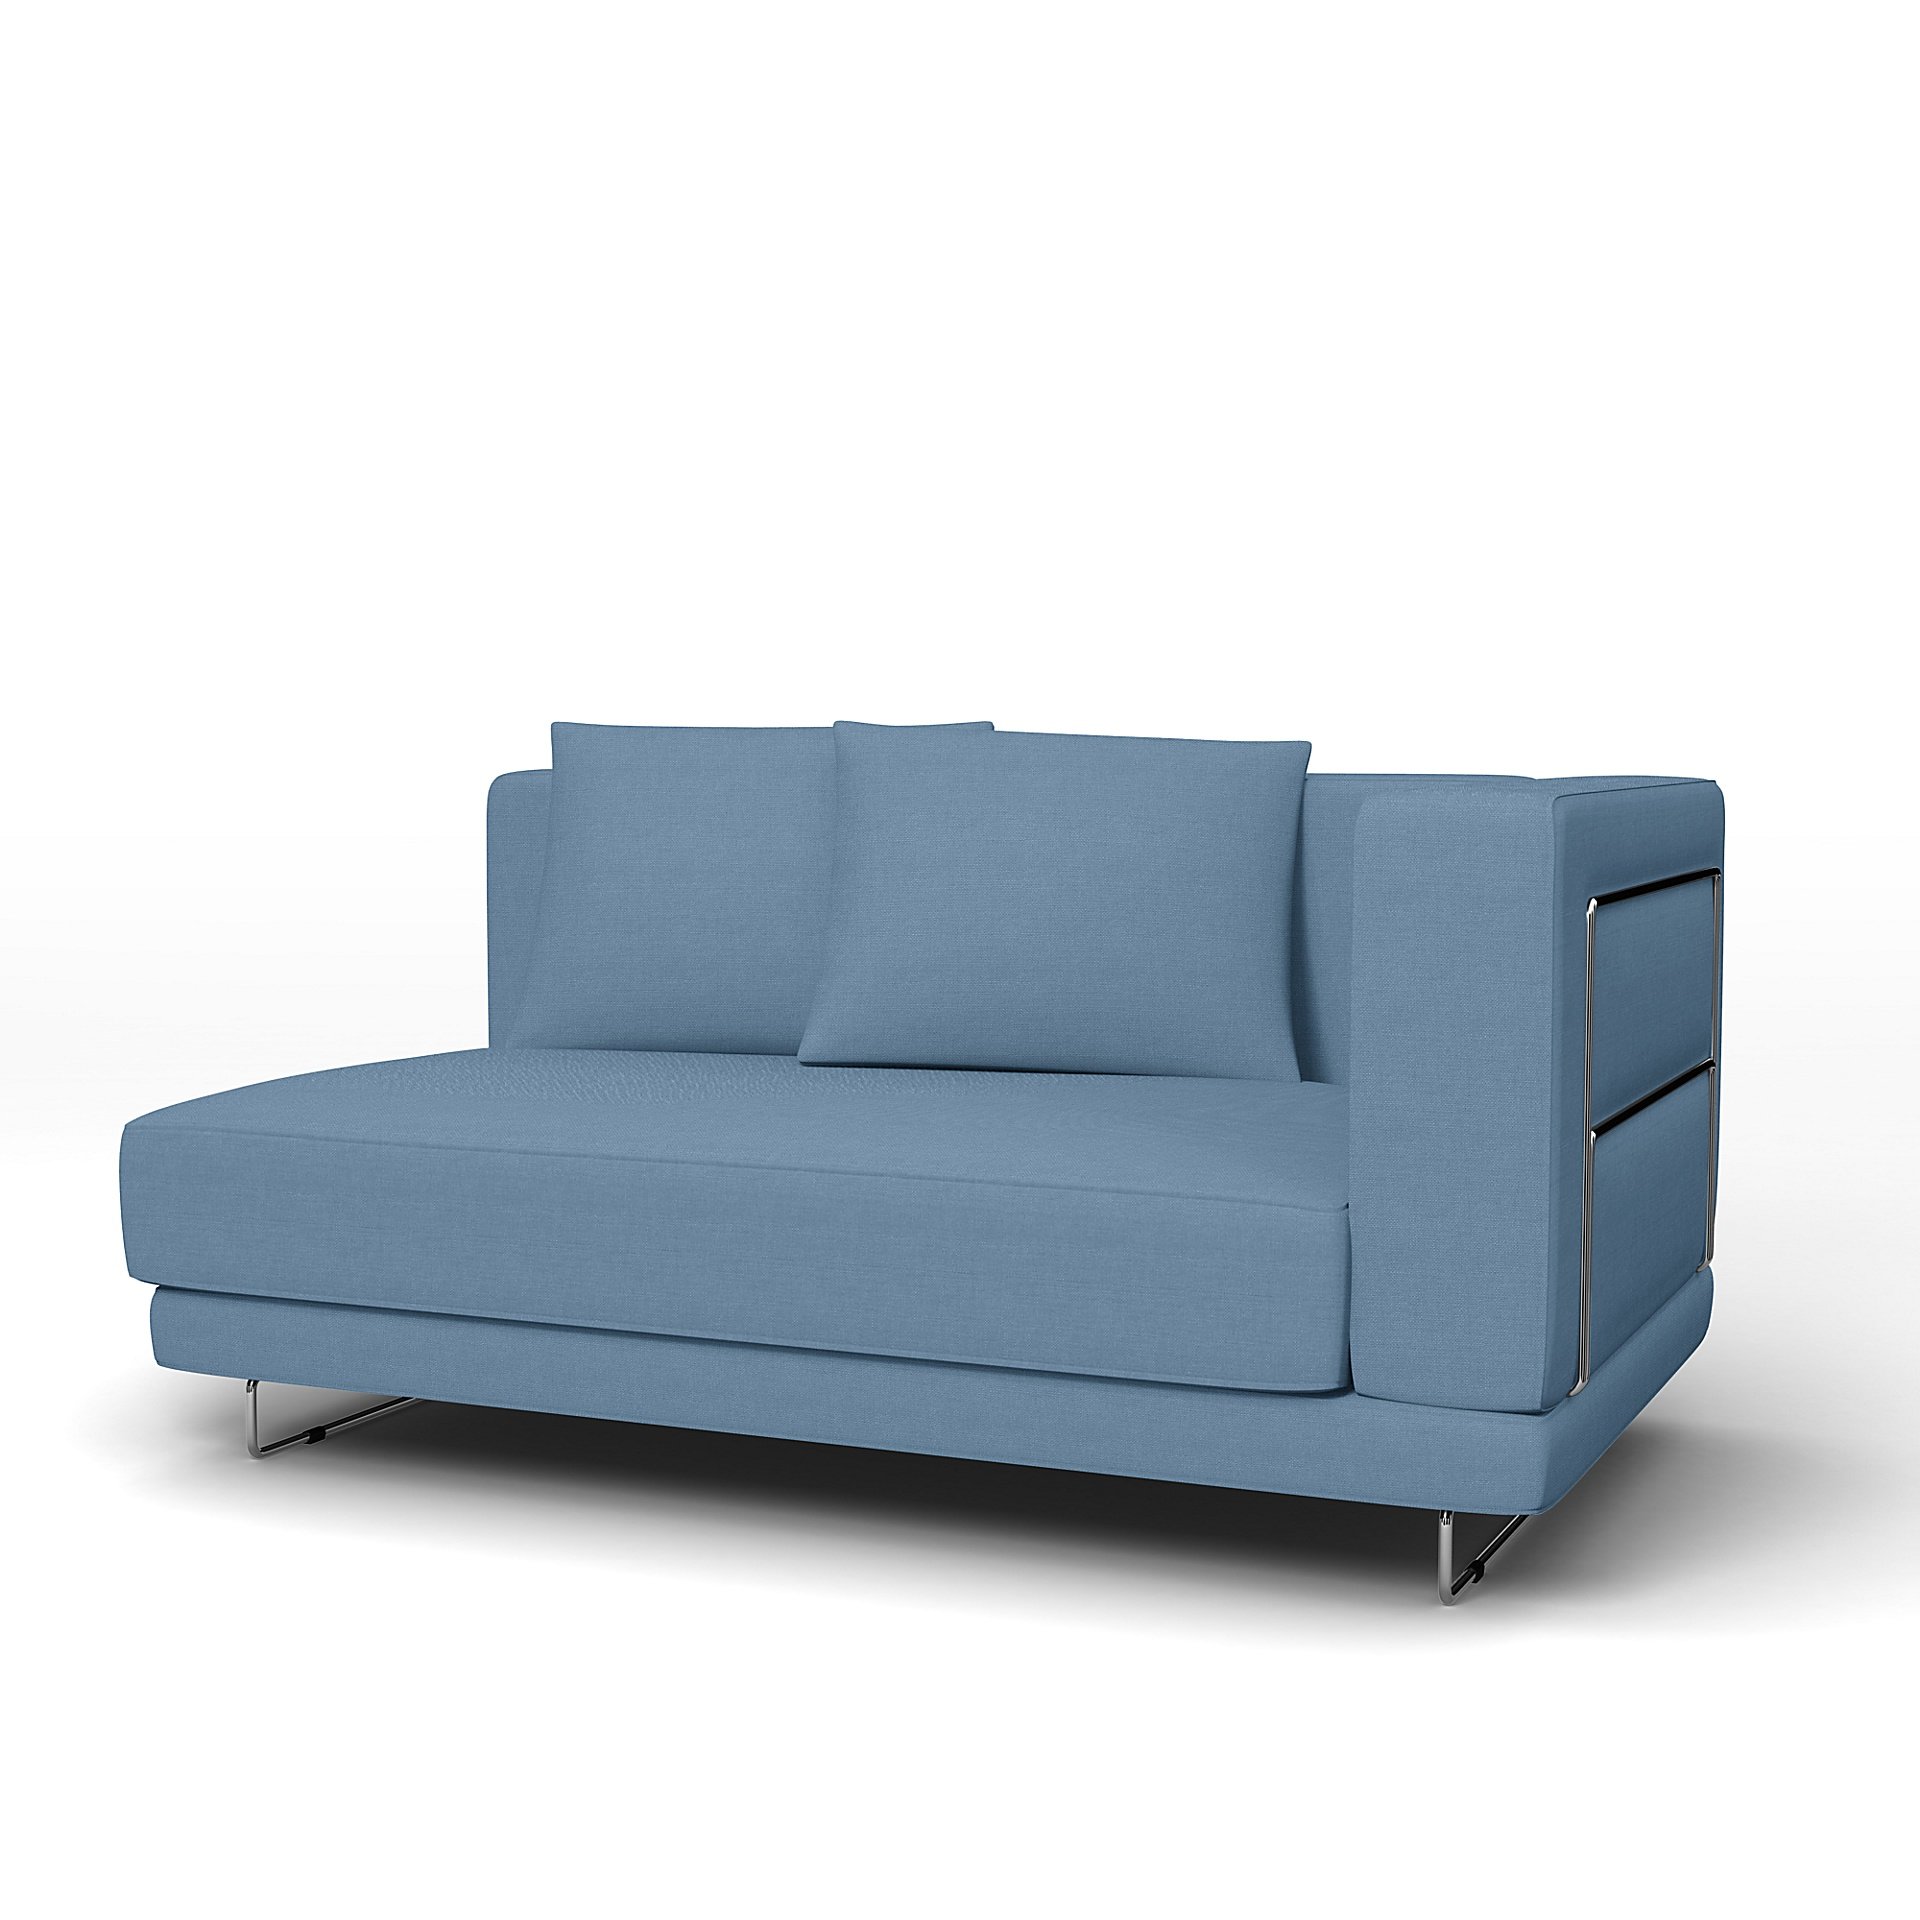 IKEA - Tylosand Sofa with Armrest Cover, Vintage Blue, Linen - Bemz